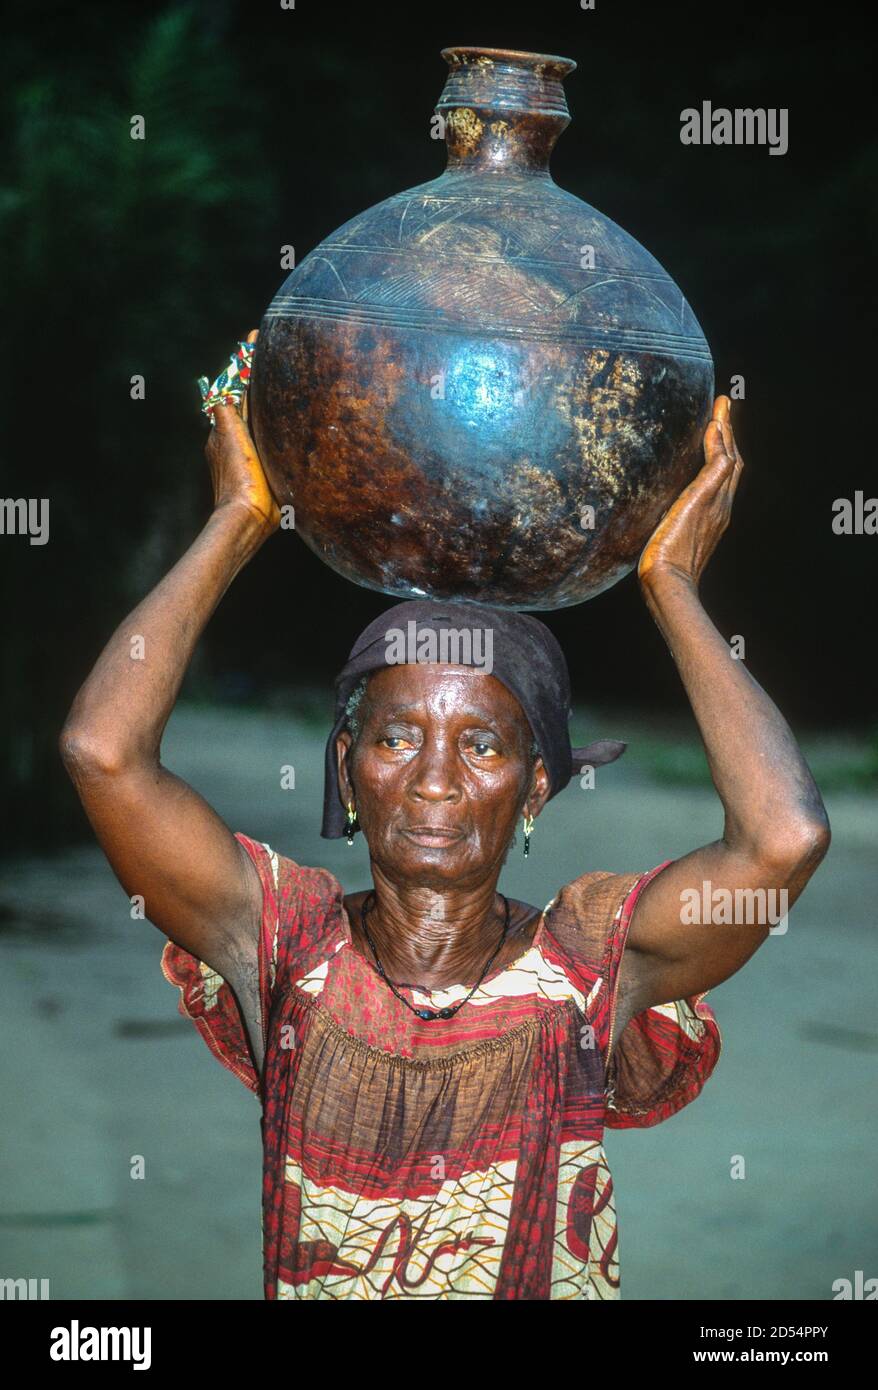 Ouassou, Ivory Coast. Elderly Ivorian Woman Carrying Pot on Head. Stock Photo